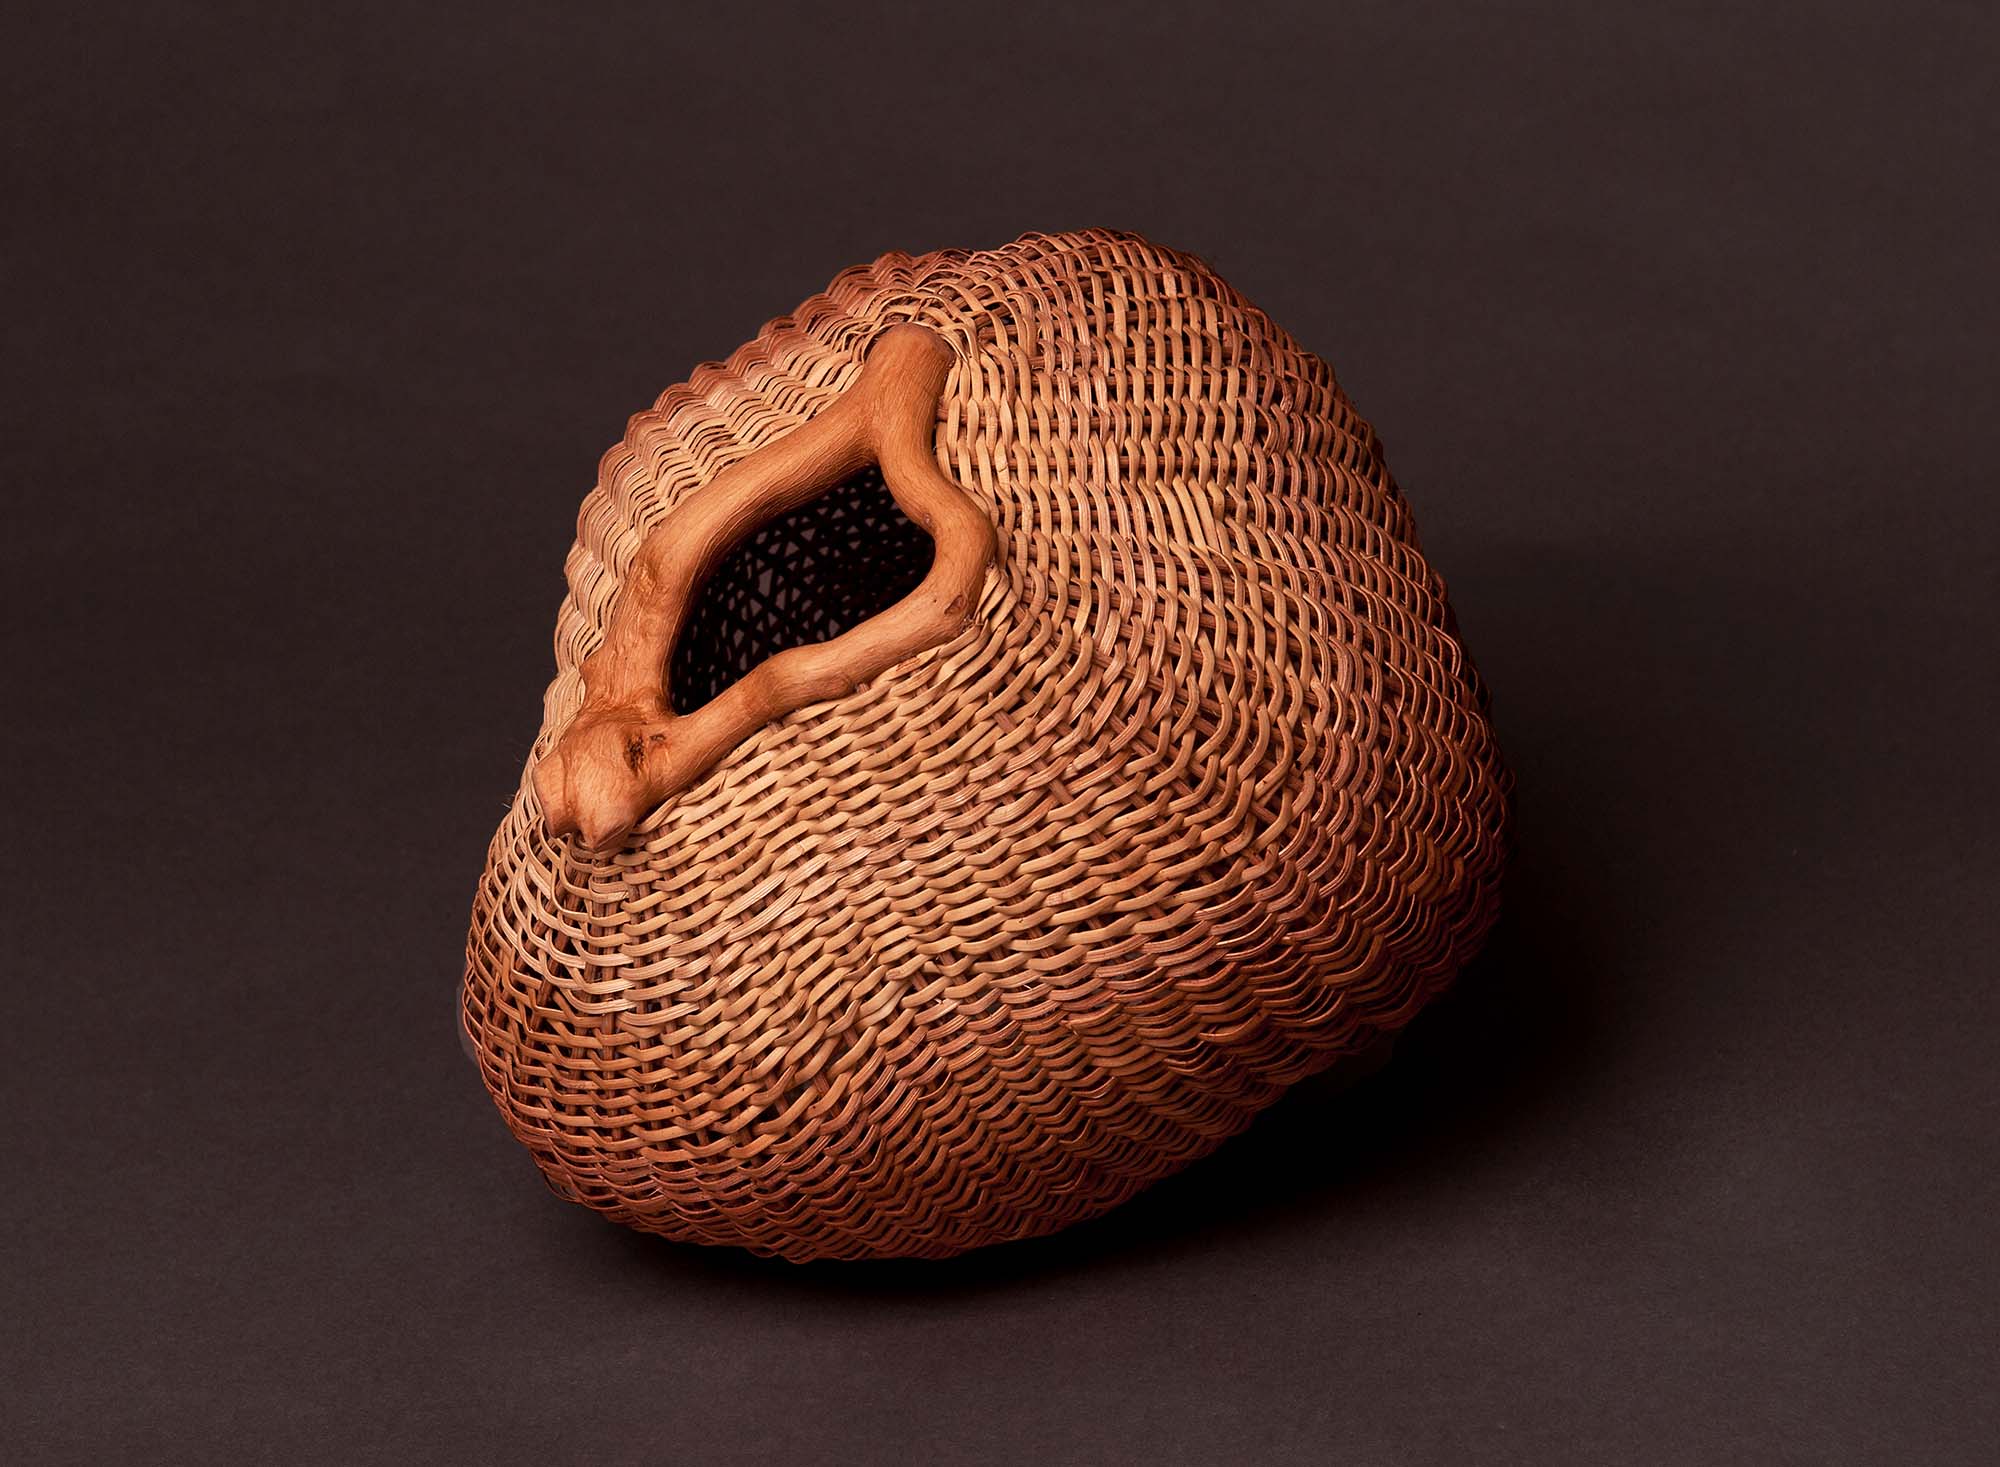 A woven basket with an organic shape